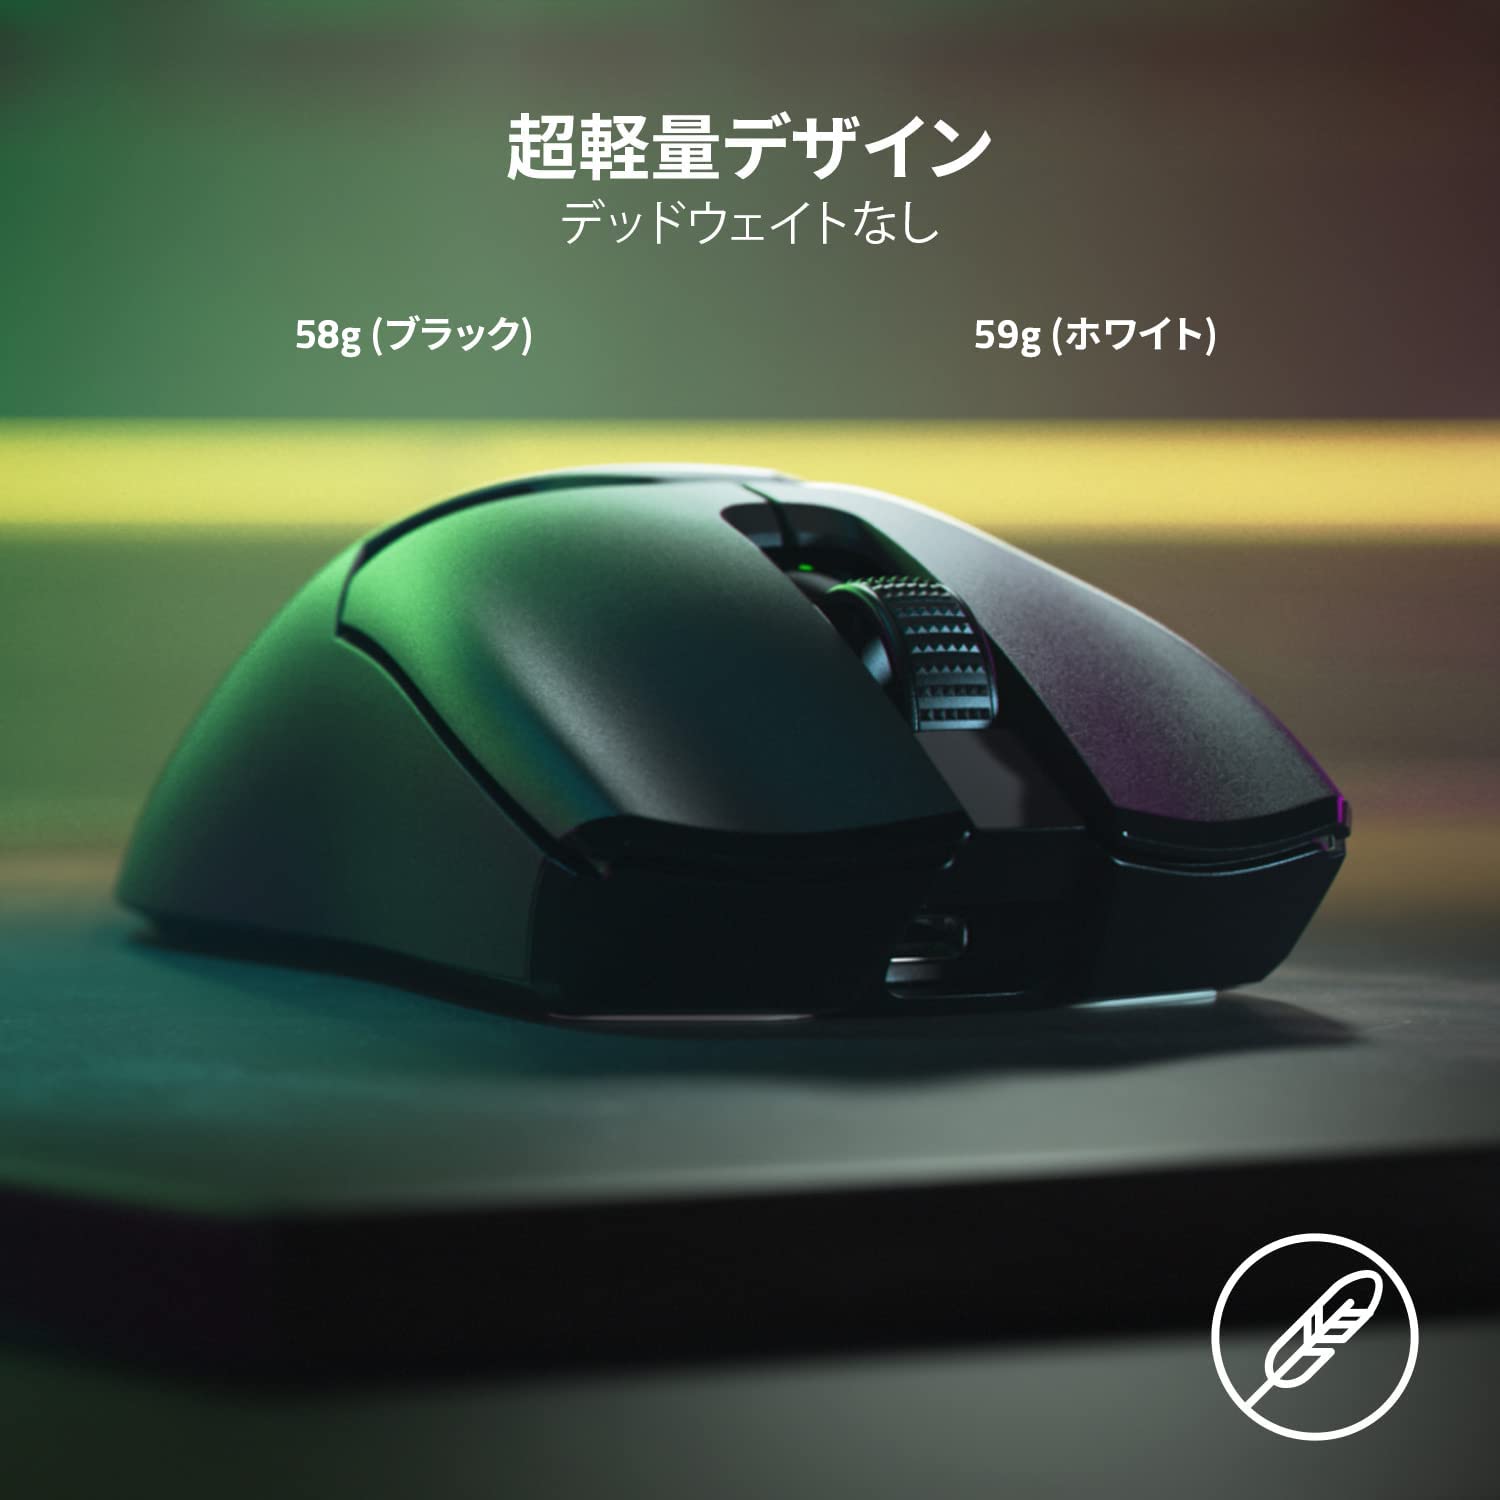 Razer、超軽量のゲーミングマウス「Razer Viper V2 Pro」を5月20日に発売 : PCパーツまとめ